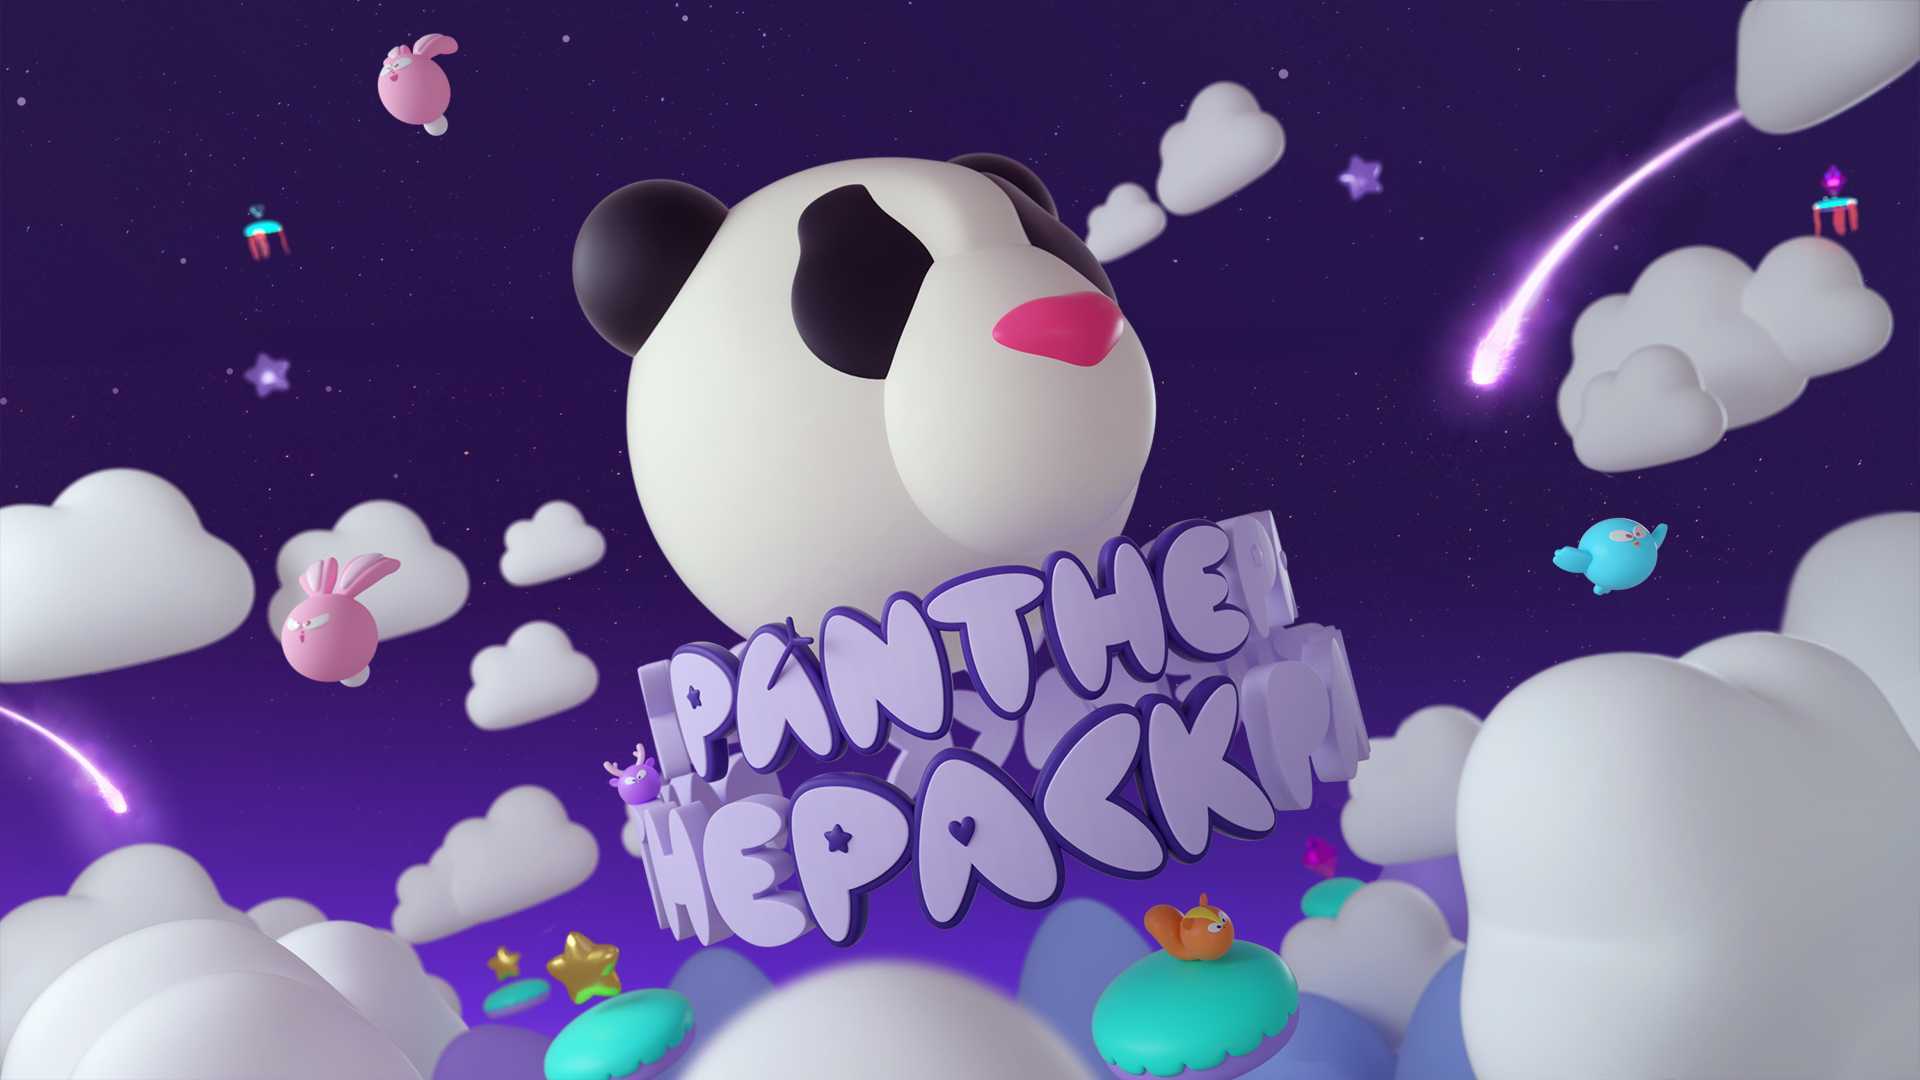 联手TEAM WANG打造PANTHEPACK熊猫团发布